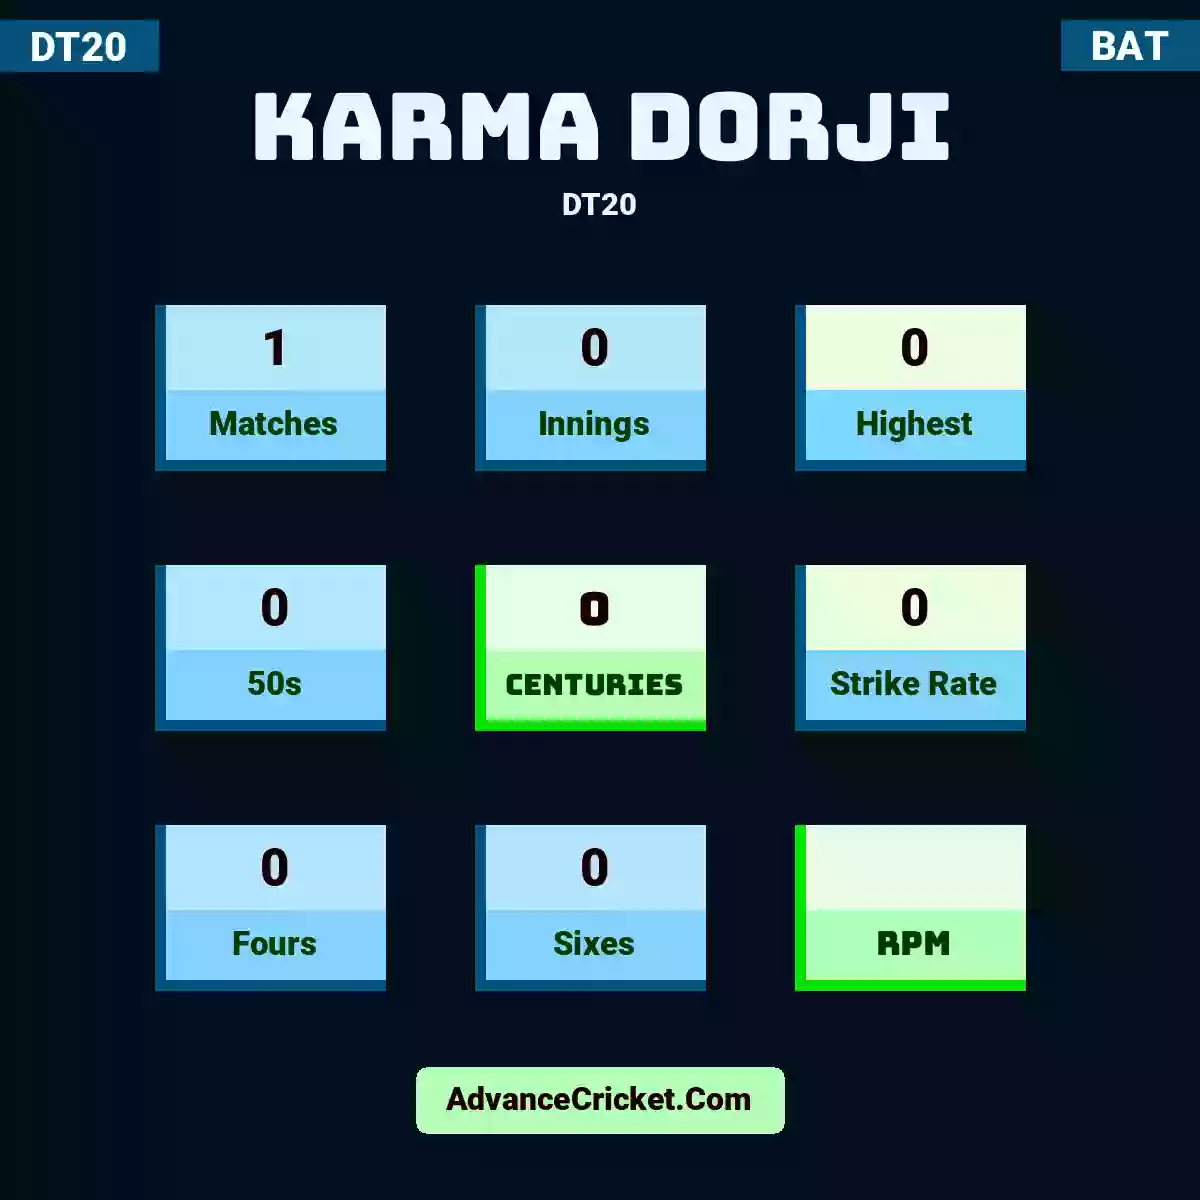 Karma Dorji DT20 , Karma Dorji played 1 matches, scored 0 runs as highest, 0 half-centuries, and 0 centuries, with a strike rate of 0. K.Dorji hit 0 fours and 0 sixes.